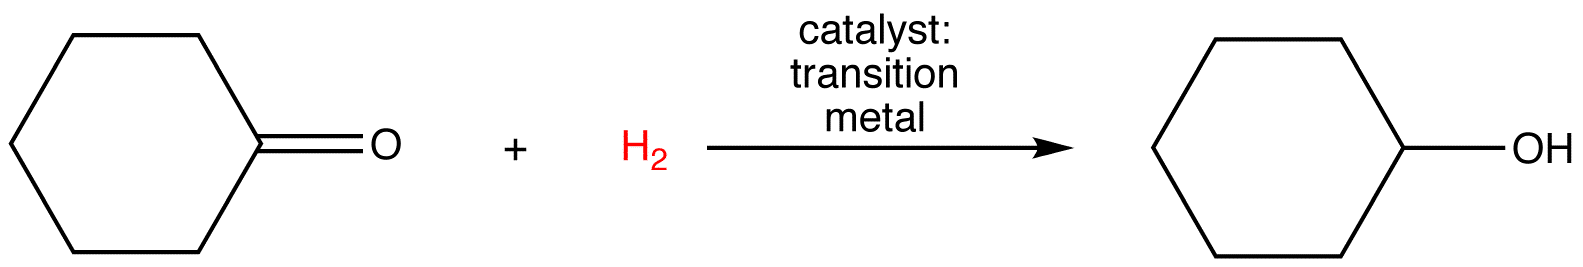 catalytichydrogenation2.png